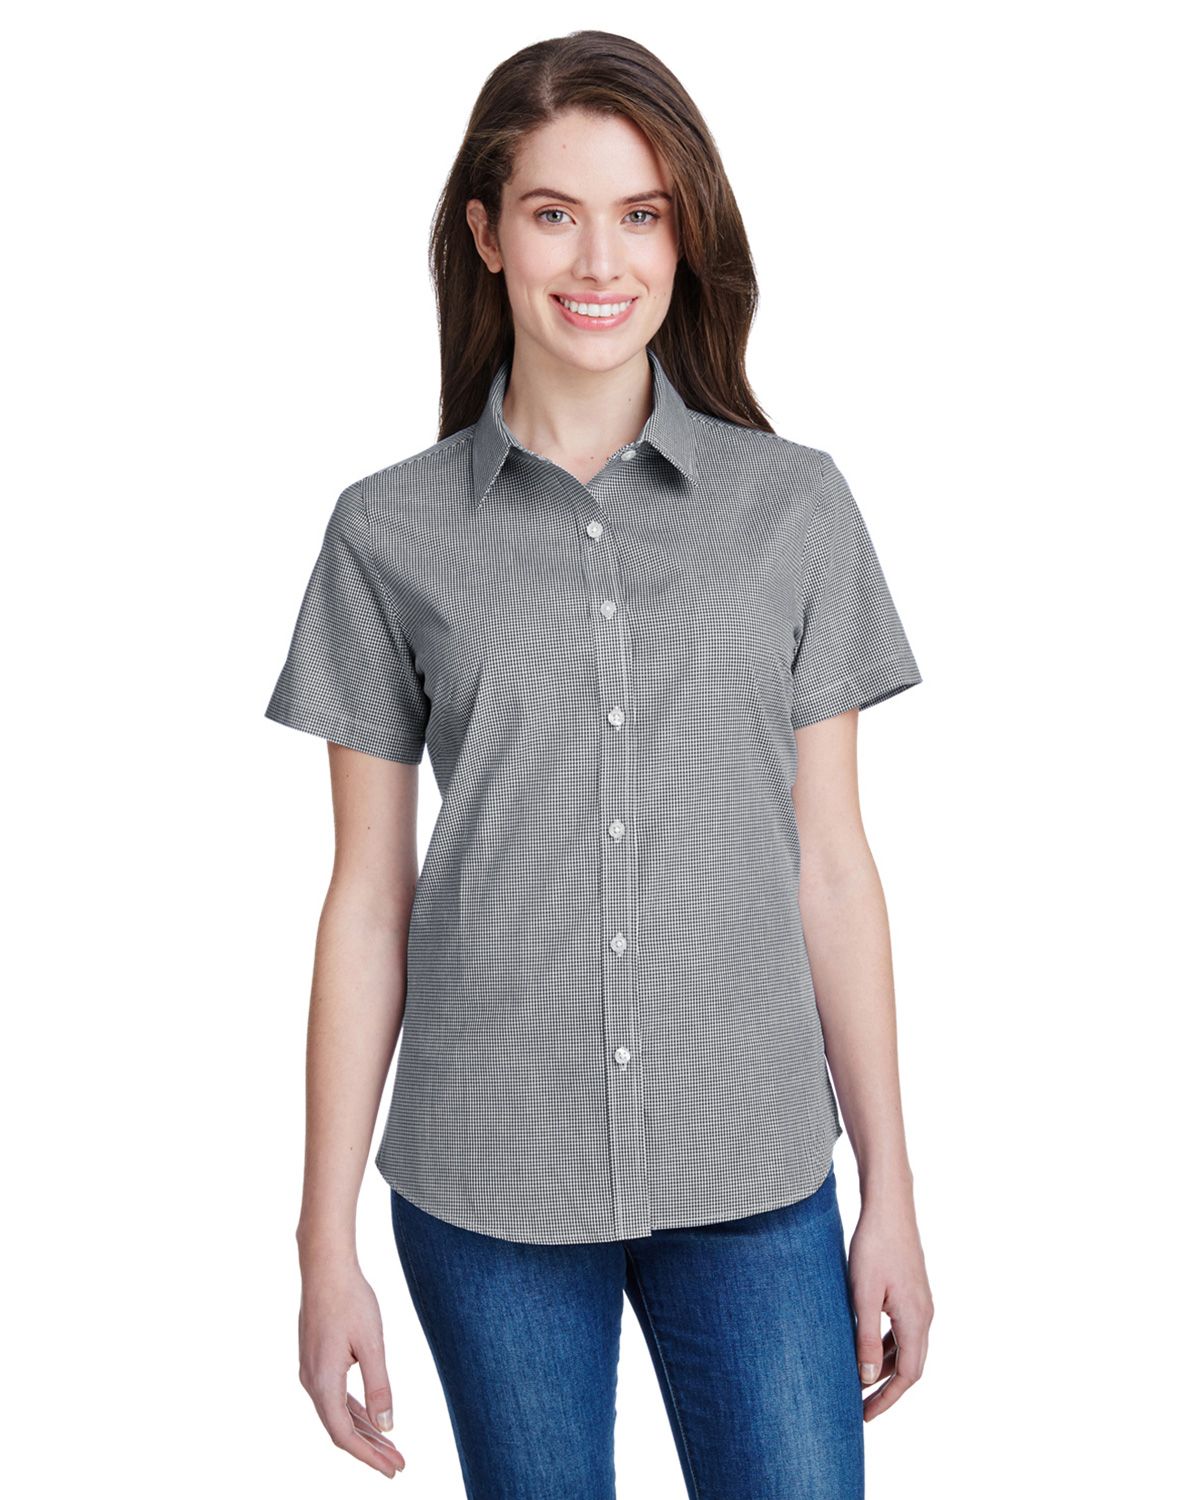 Artisan Collection RP321 Women's Microcheck Gingham Short-Sleeve Cotton Shirt